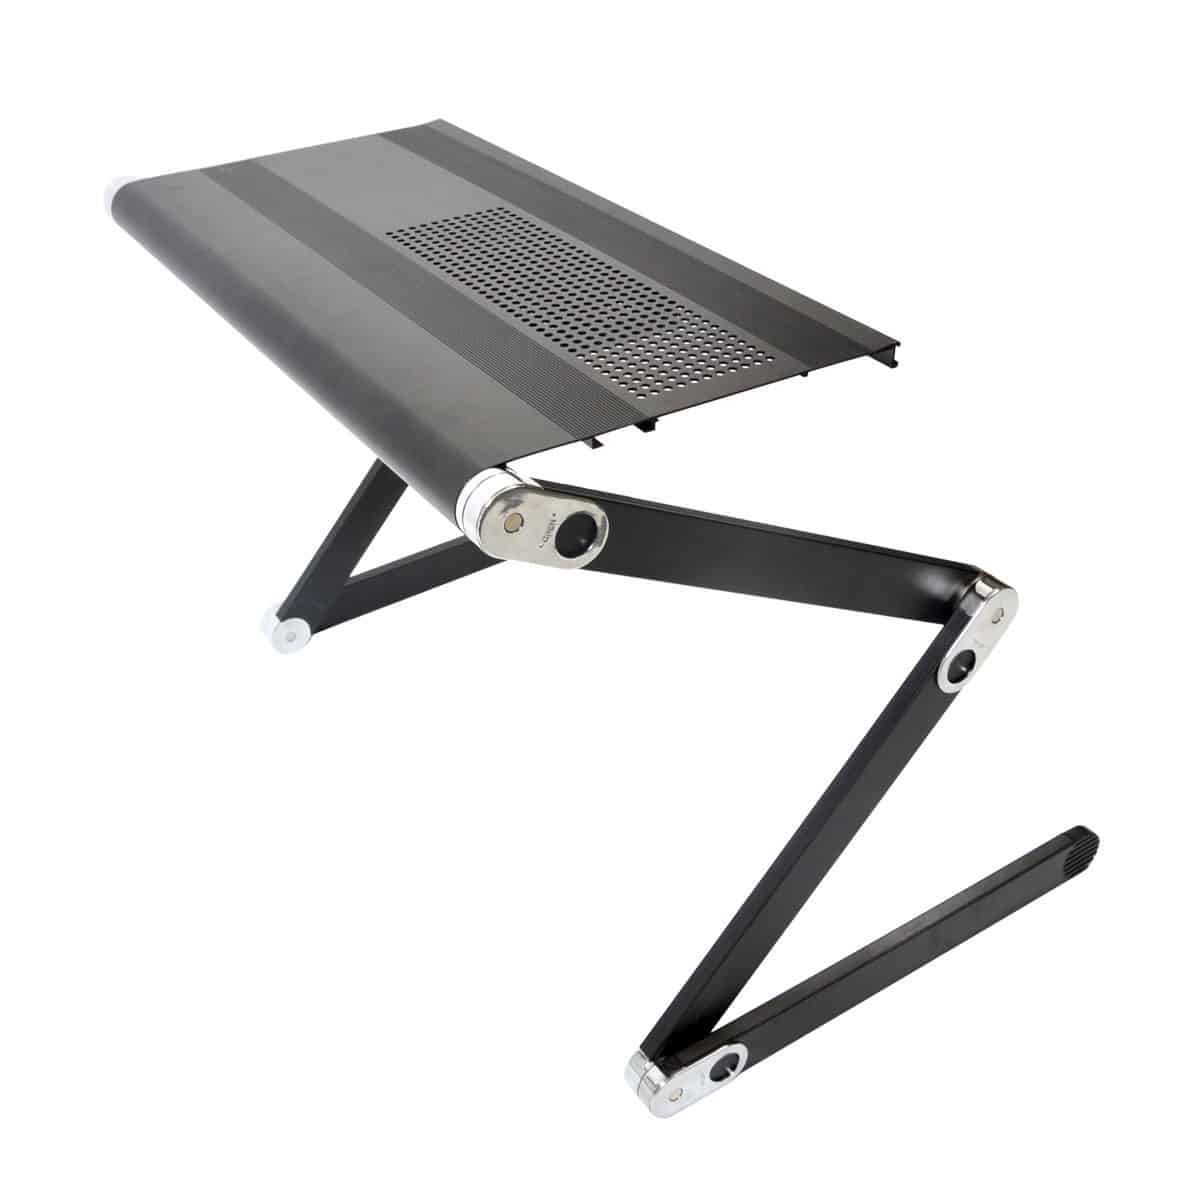 Thanko Super Gorone Desk Flexible Laptop Stand